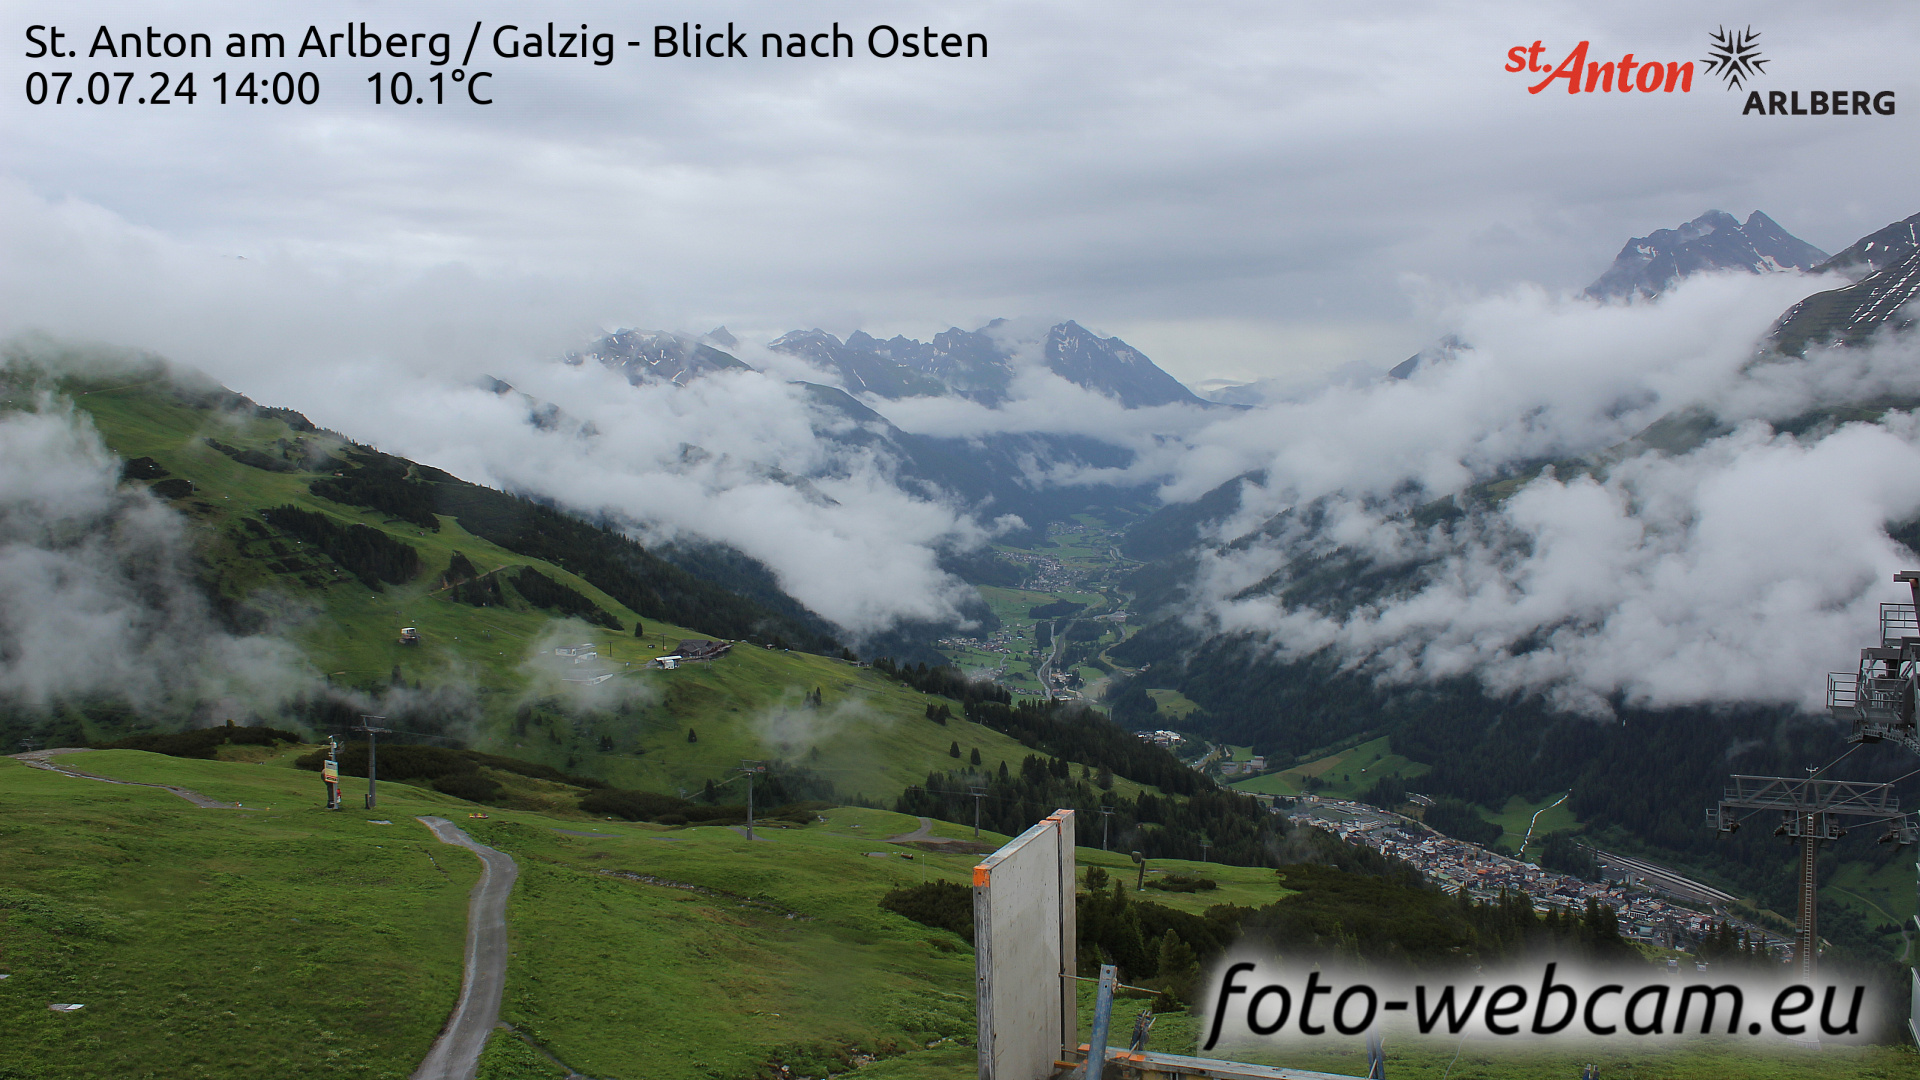 St. Anton am Arlberg Dom. 14:01